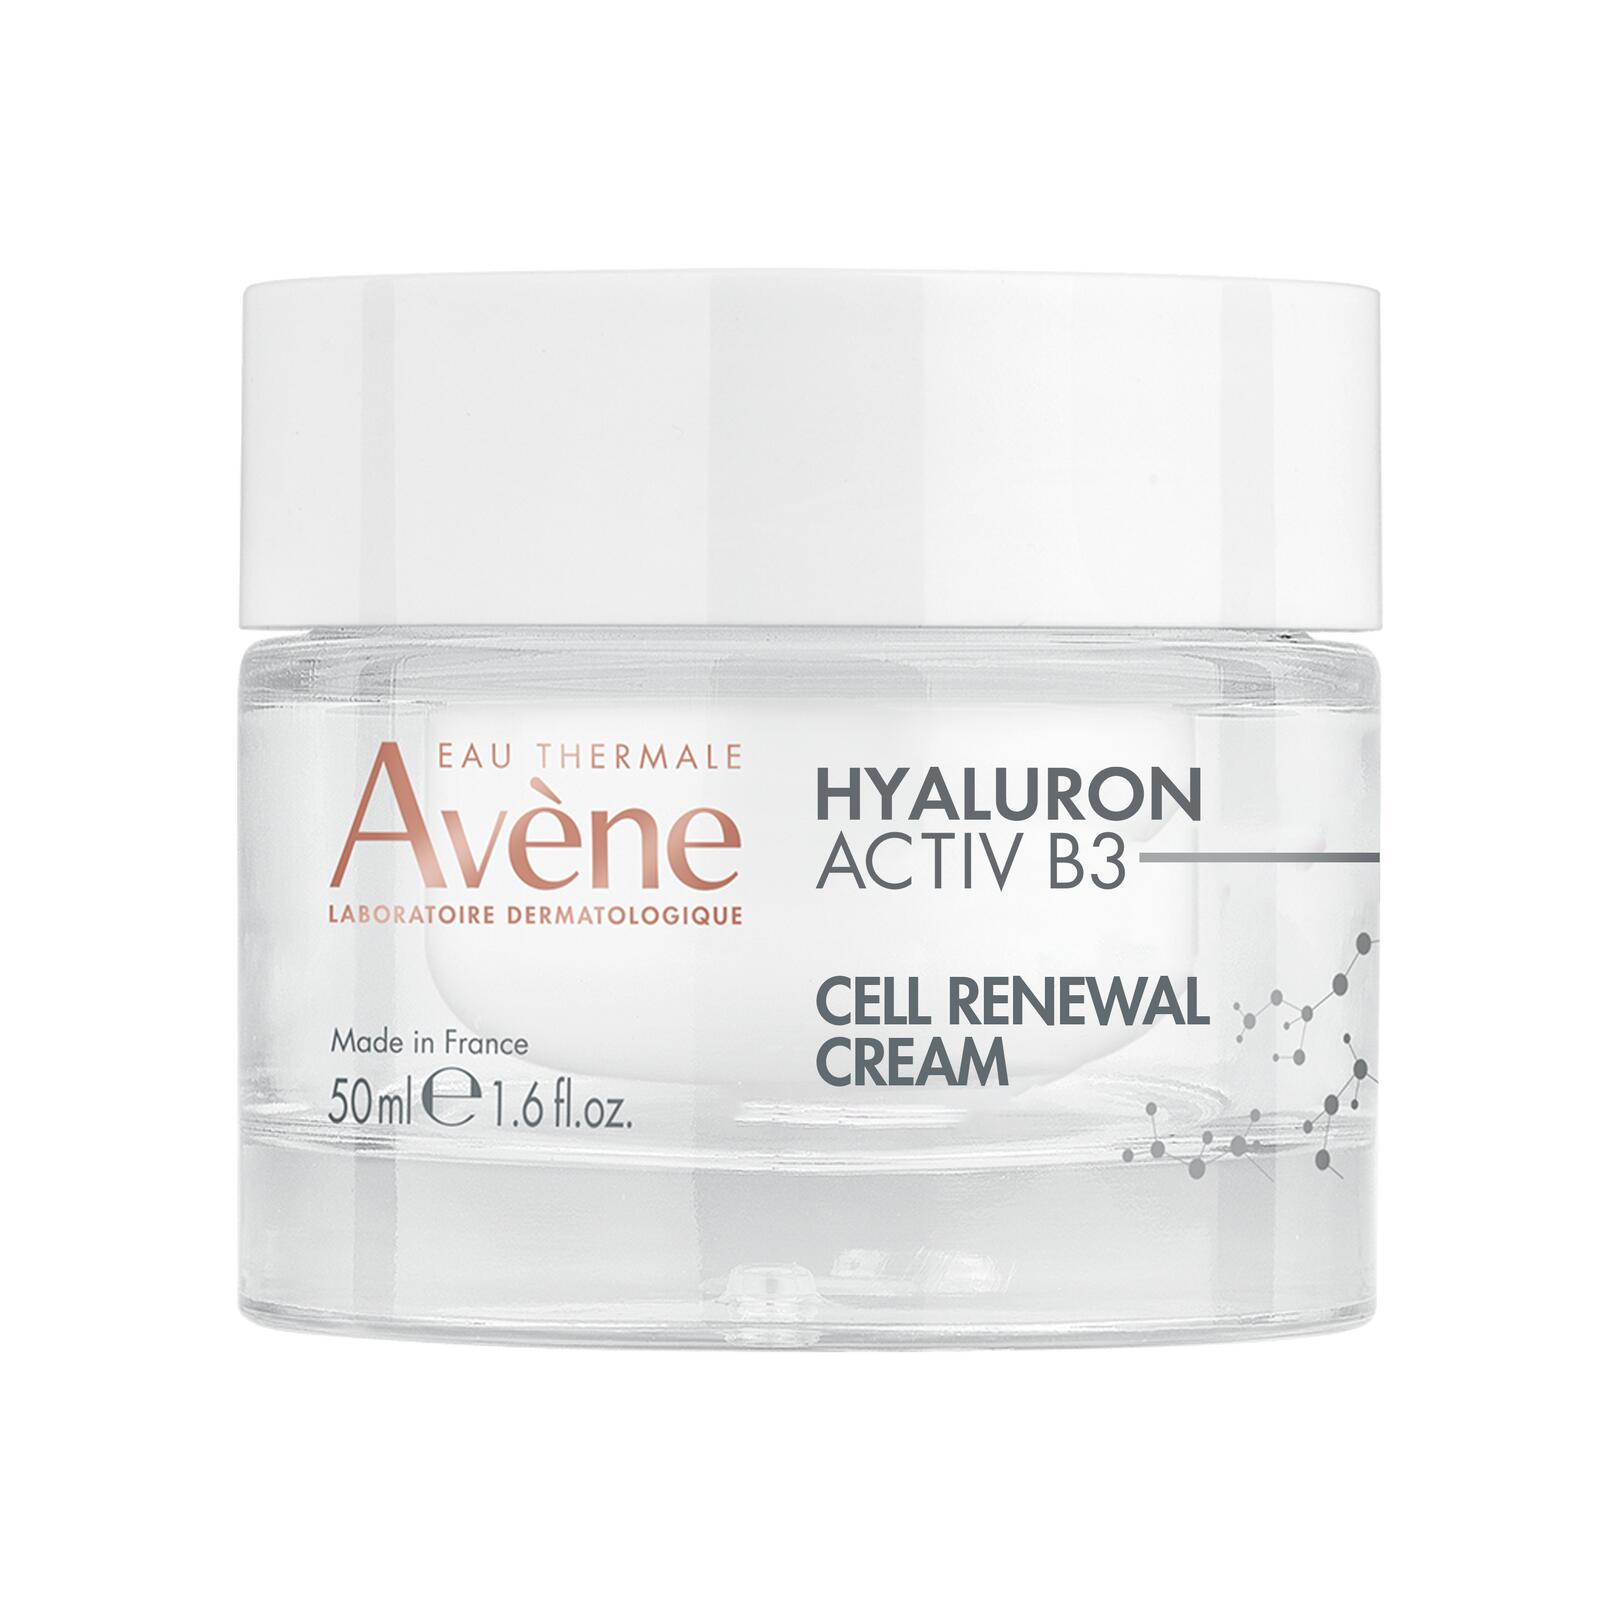 Hyaluron Activ B3 Cell Renewal Cream